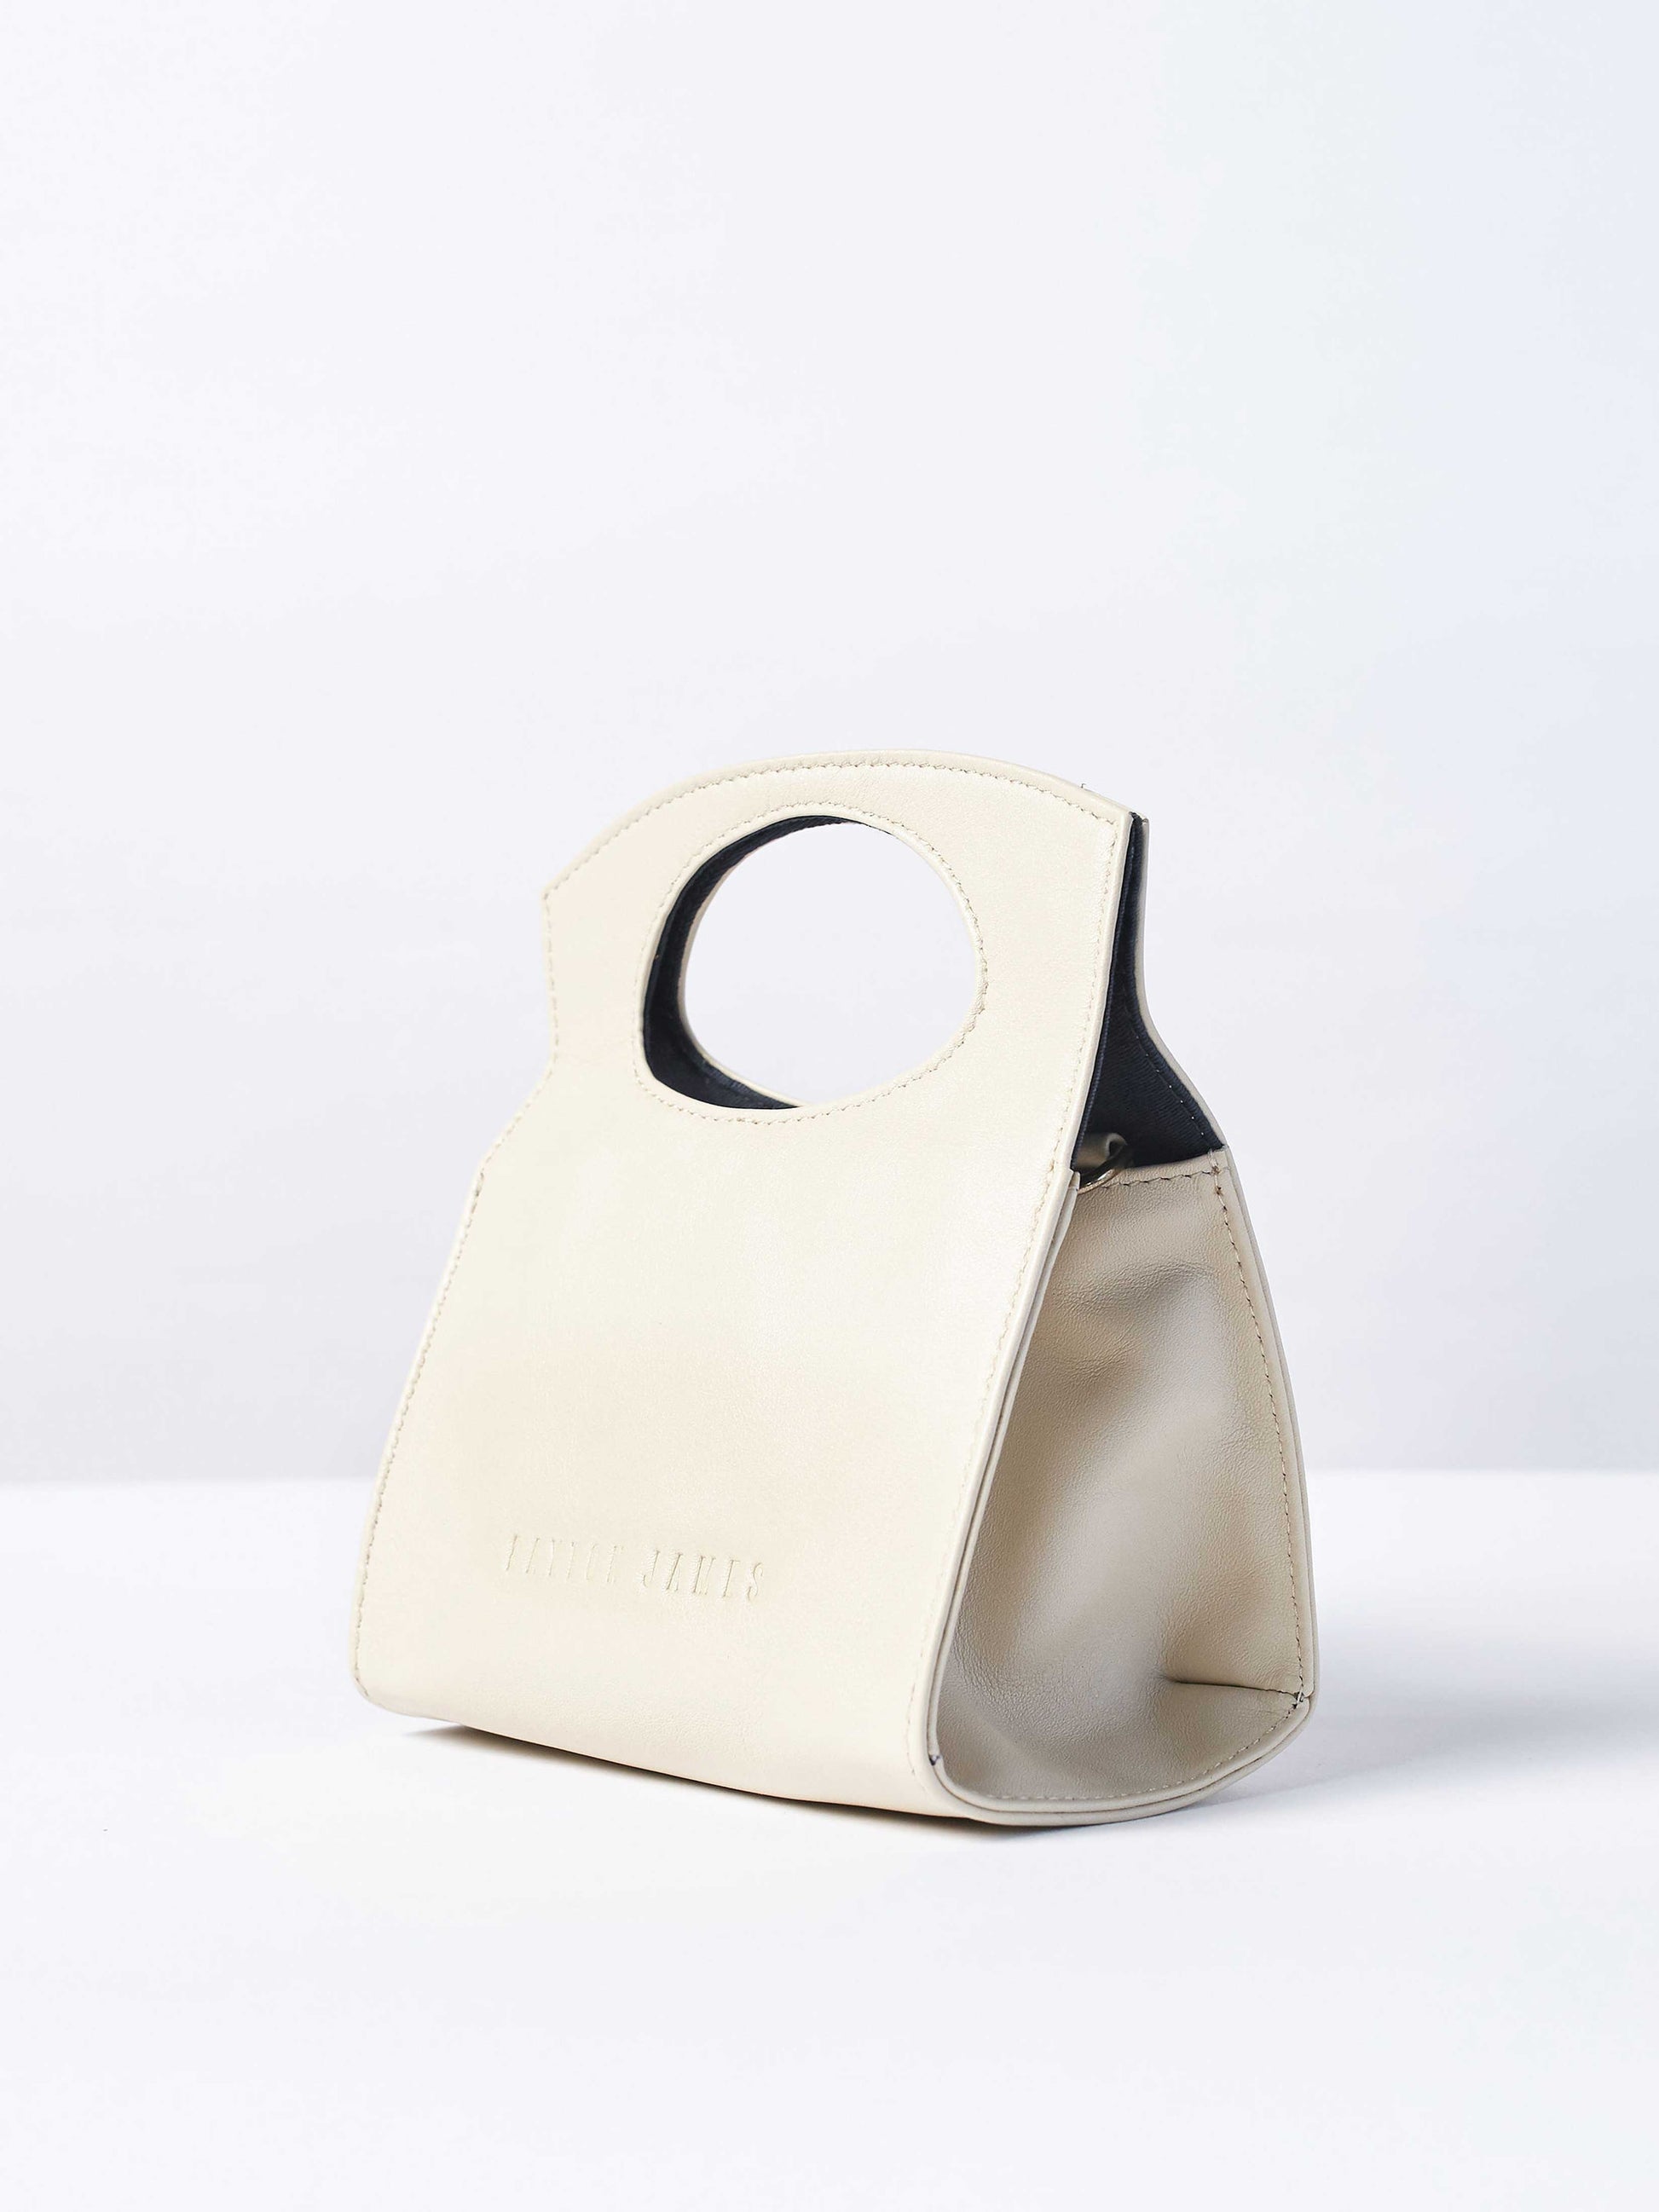 Leather- Crossbody Handbag- Pearl White Color-by-PaytonJames-Nashville-designer.